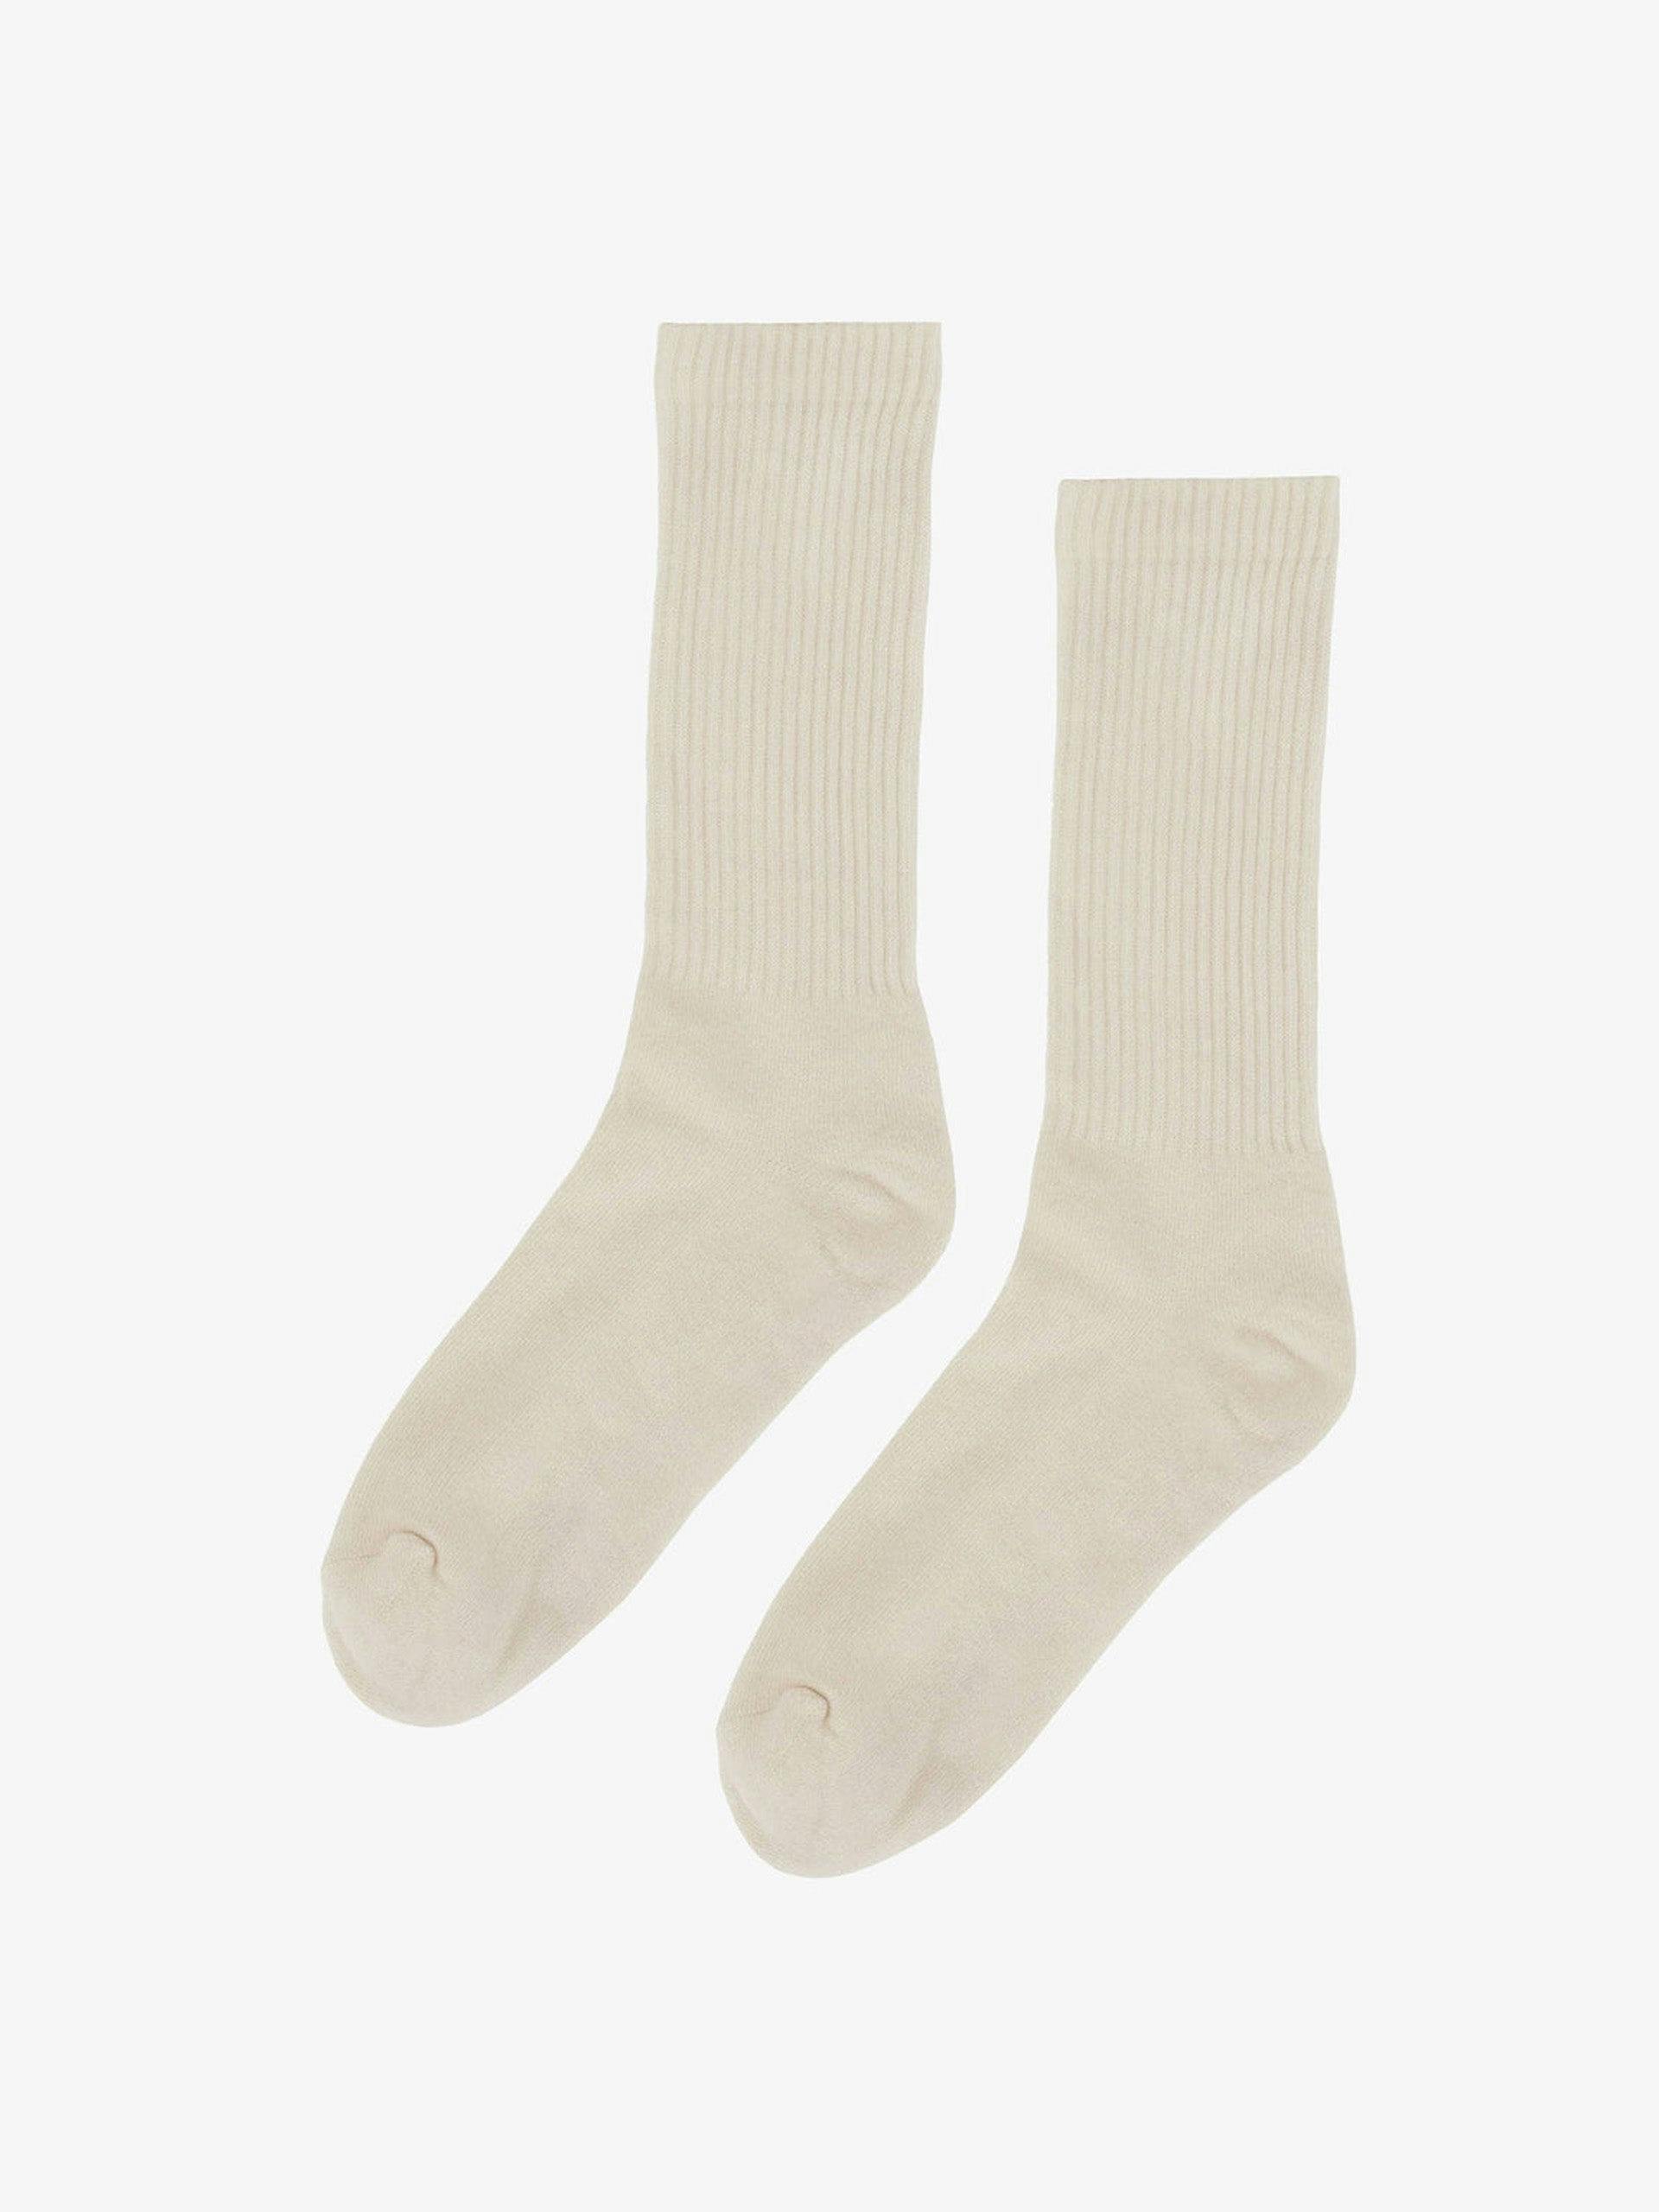 Organic active socks